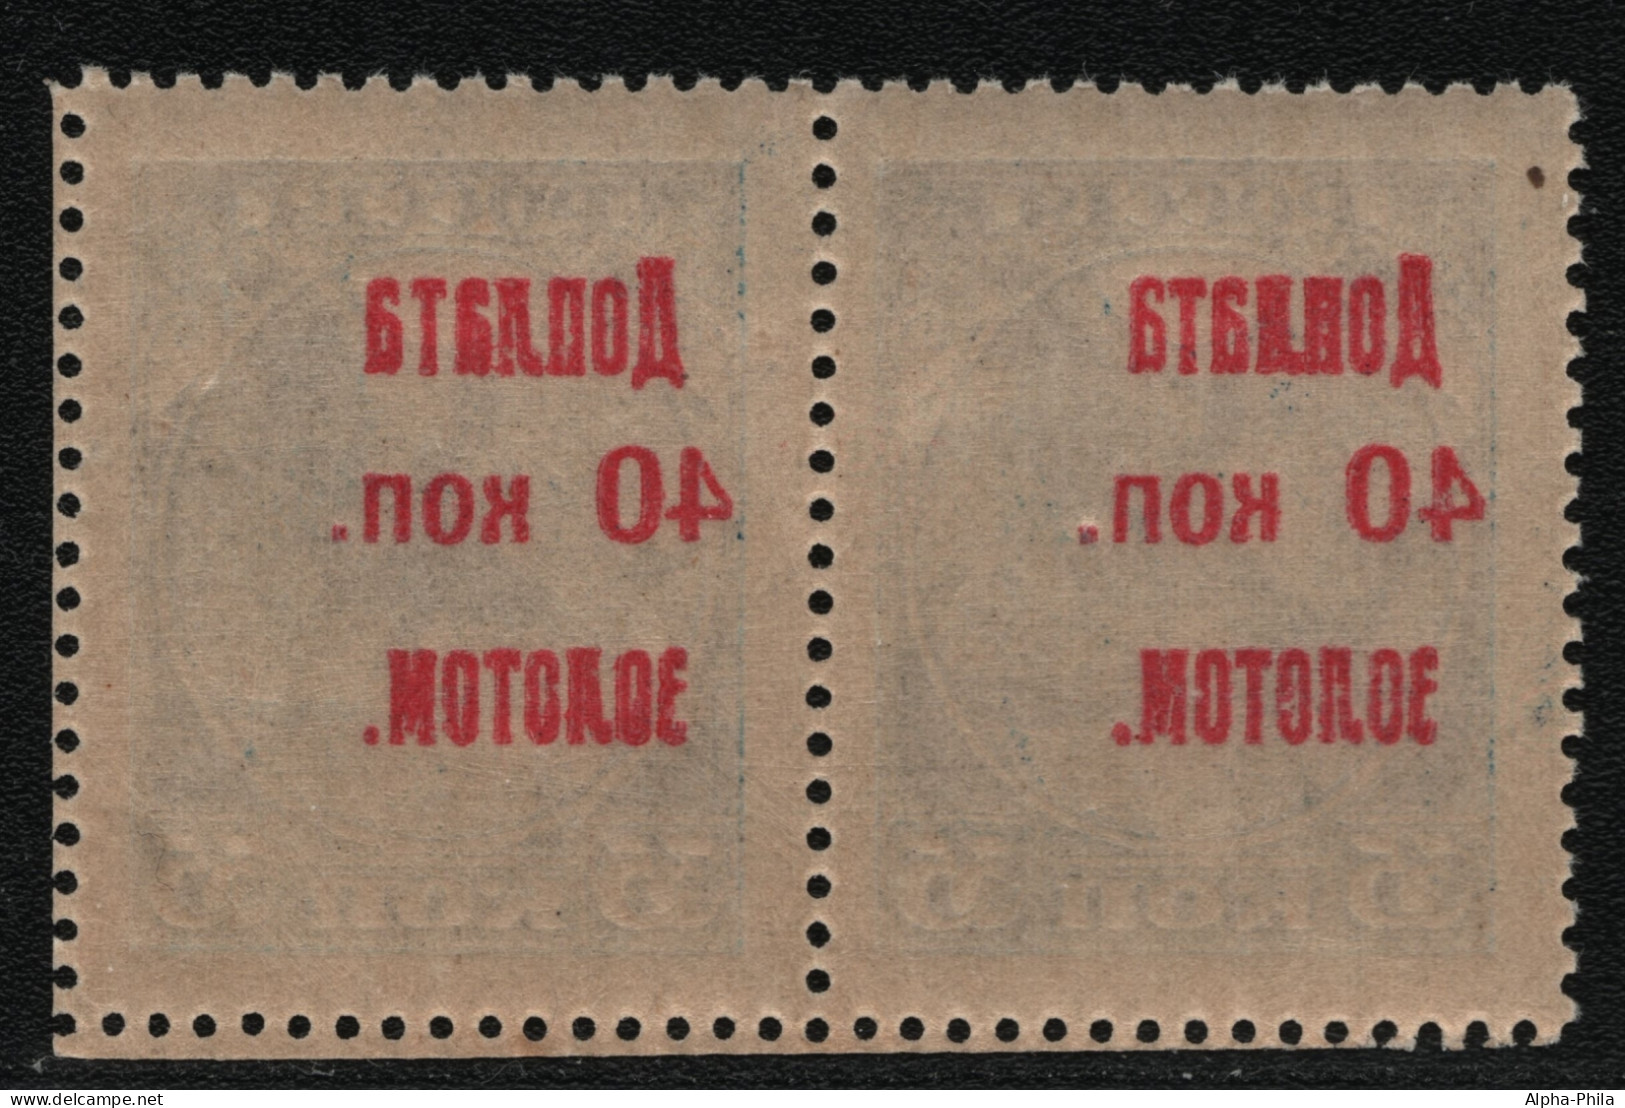 Russia / Sowjetunion 1924 - Porto - Mi-Nr. 9 ** - MNH - Aufdruck-Abklatsch - Taxe